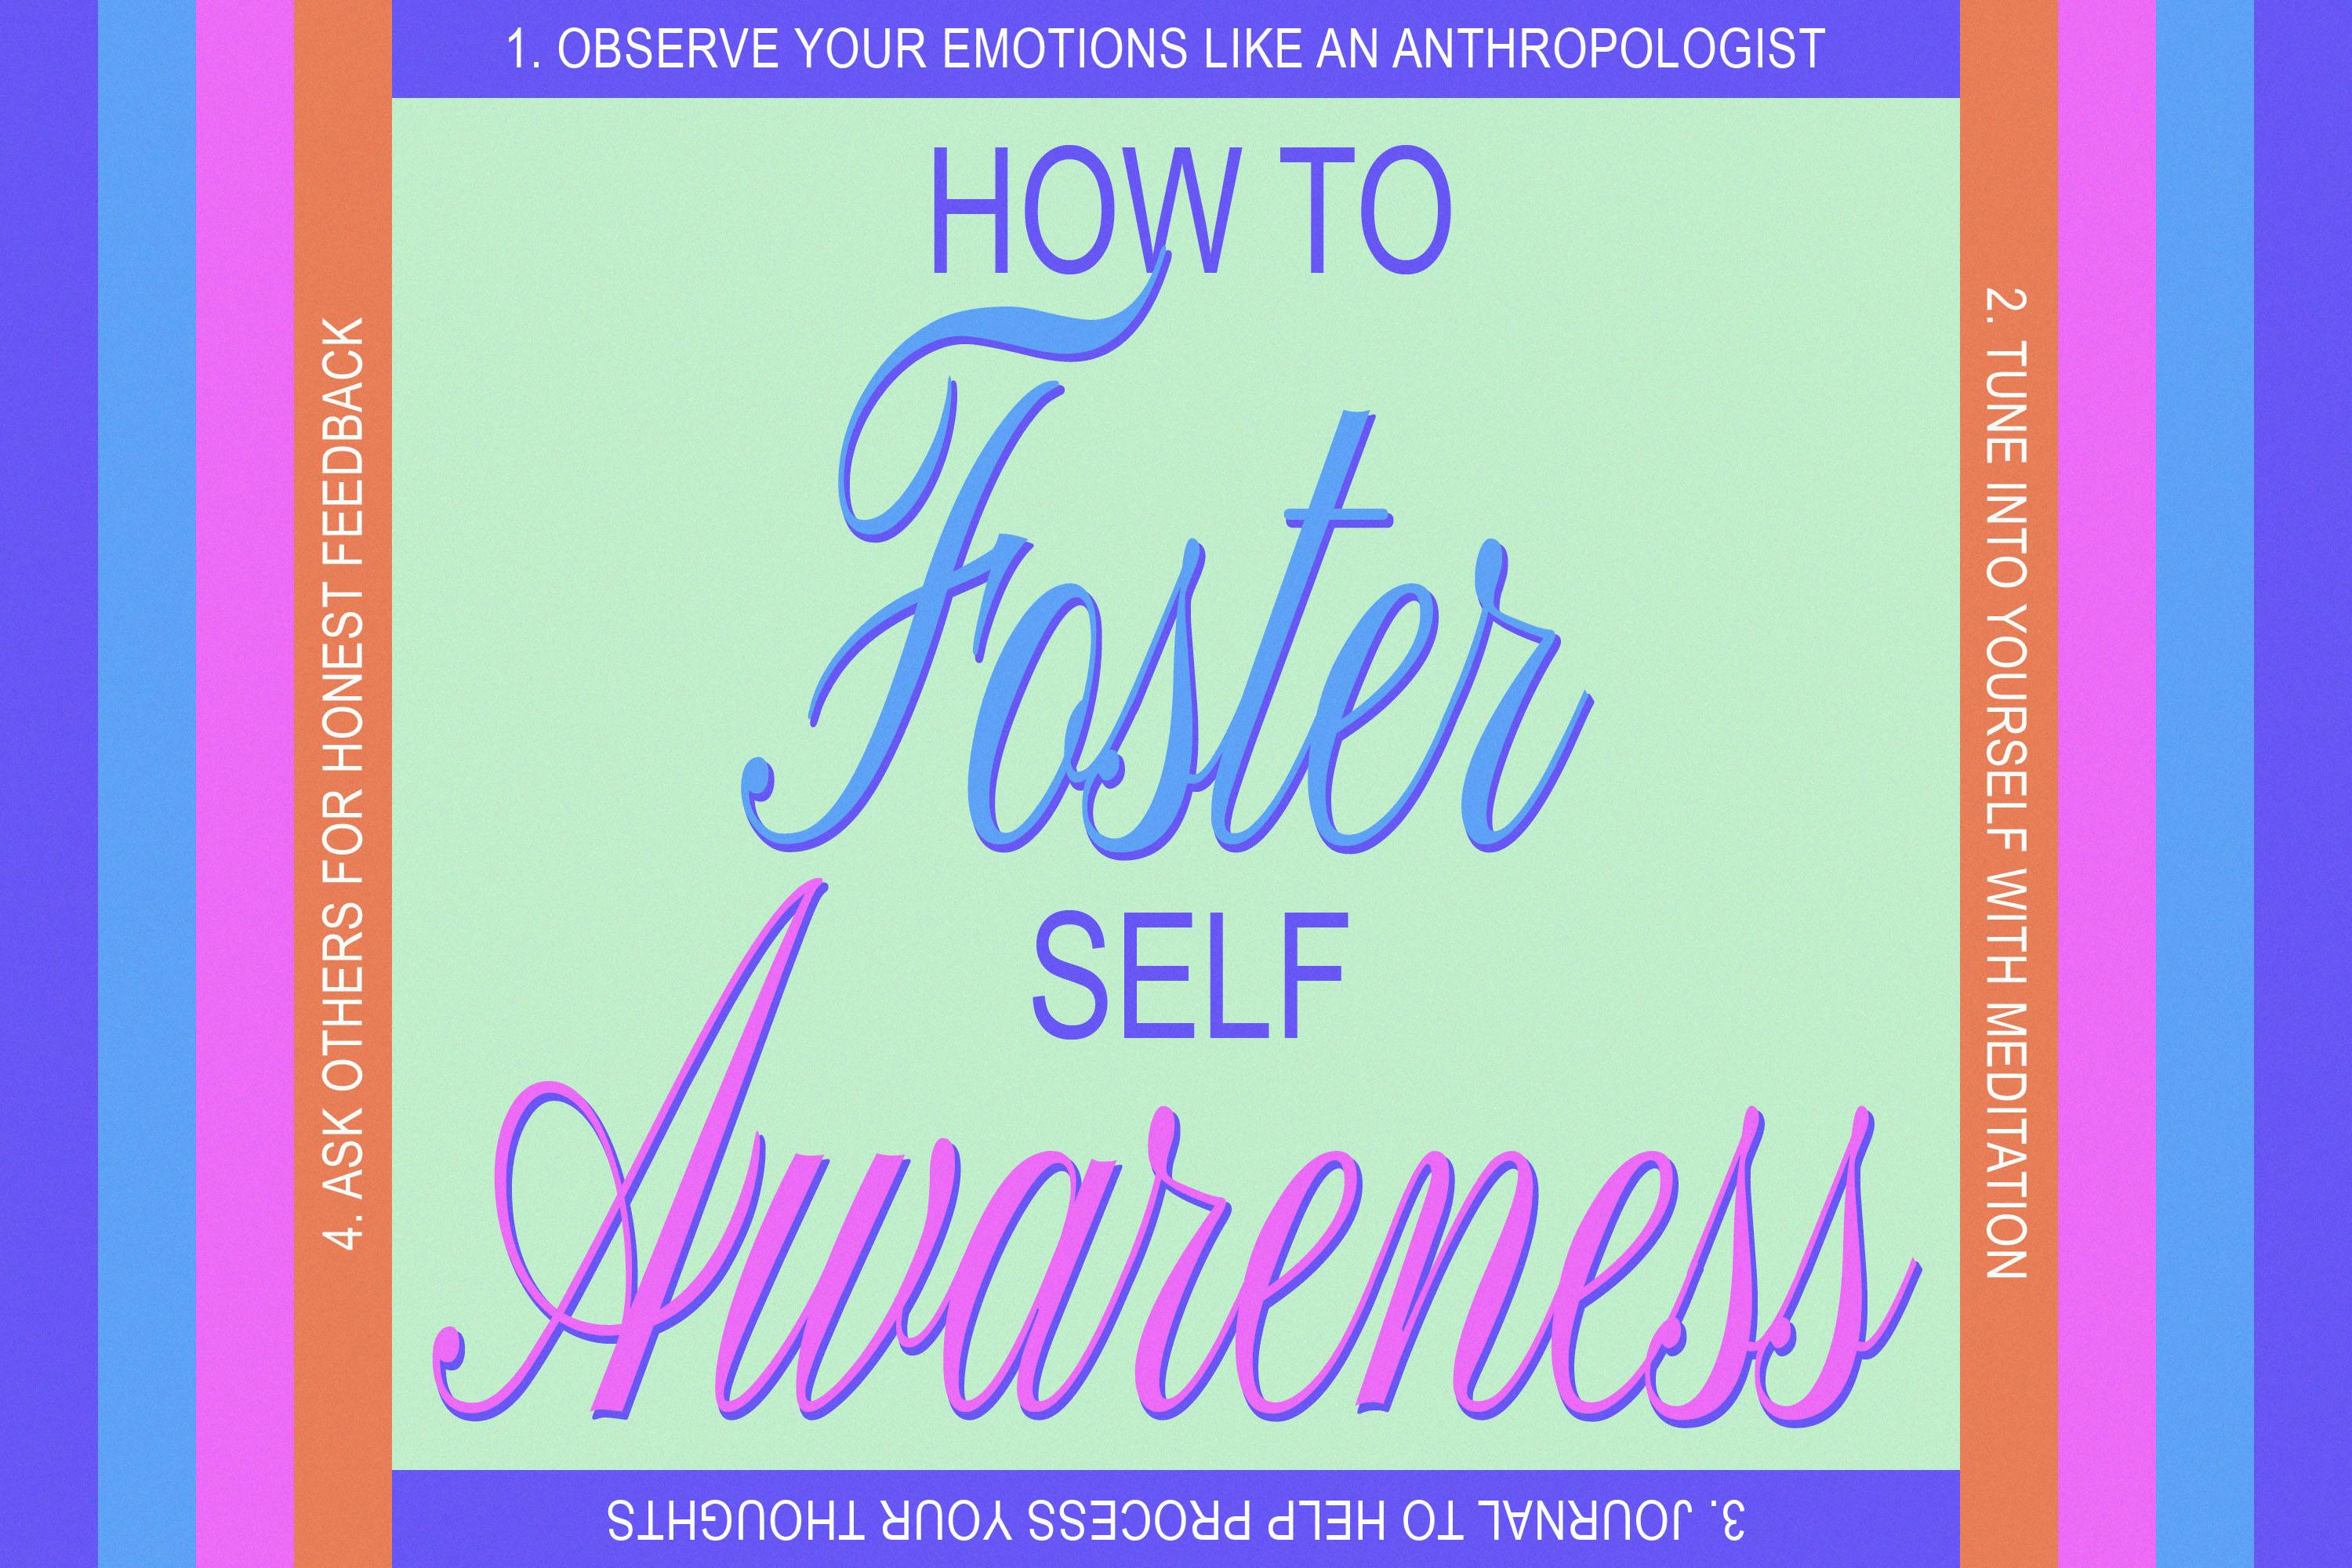 How to Foster Self-Awareness